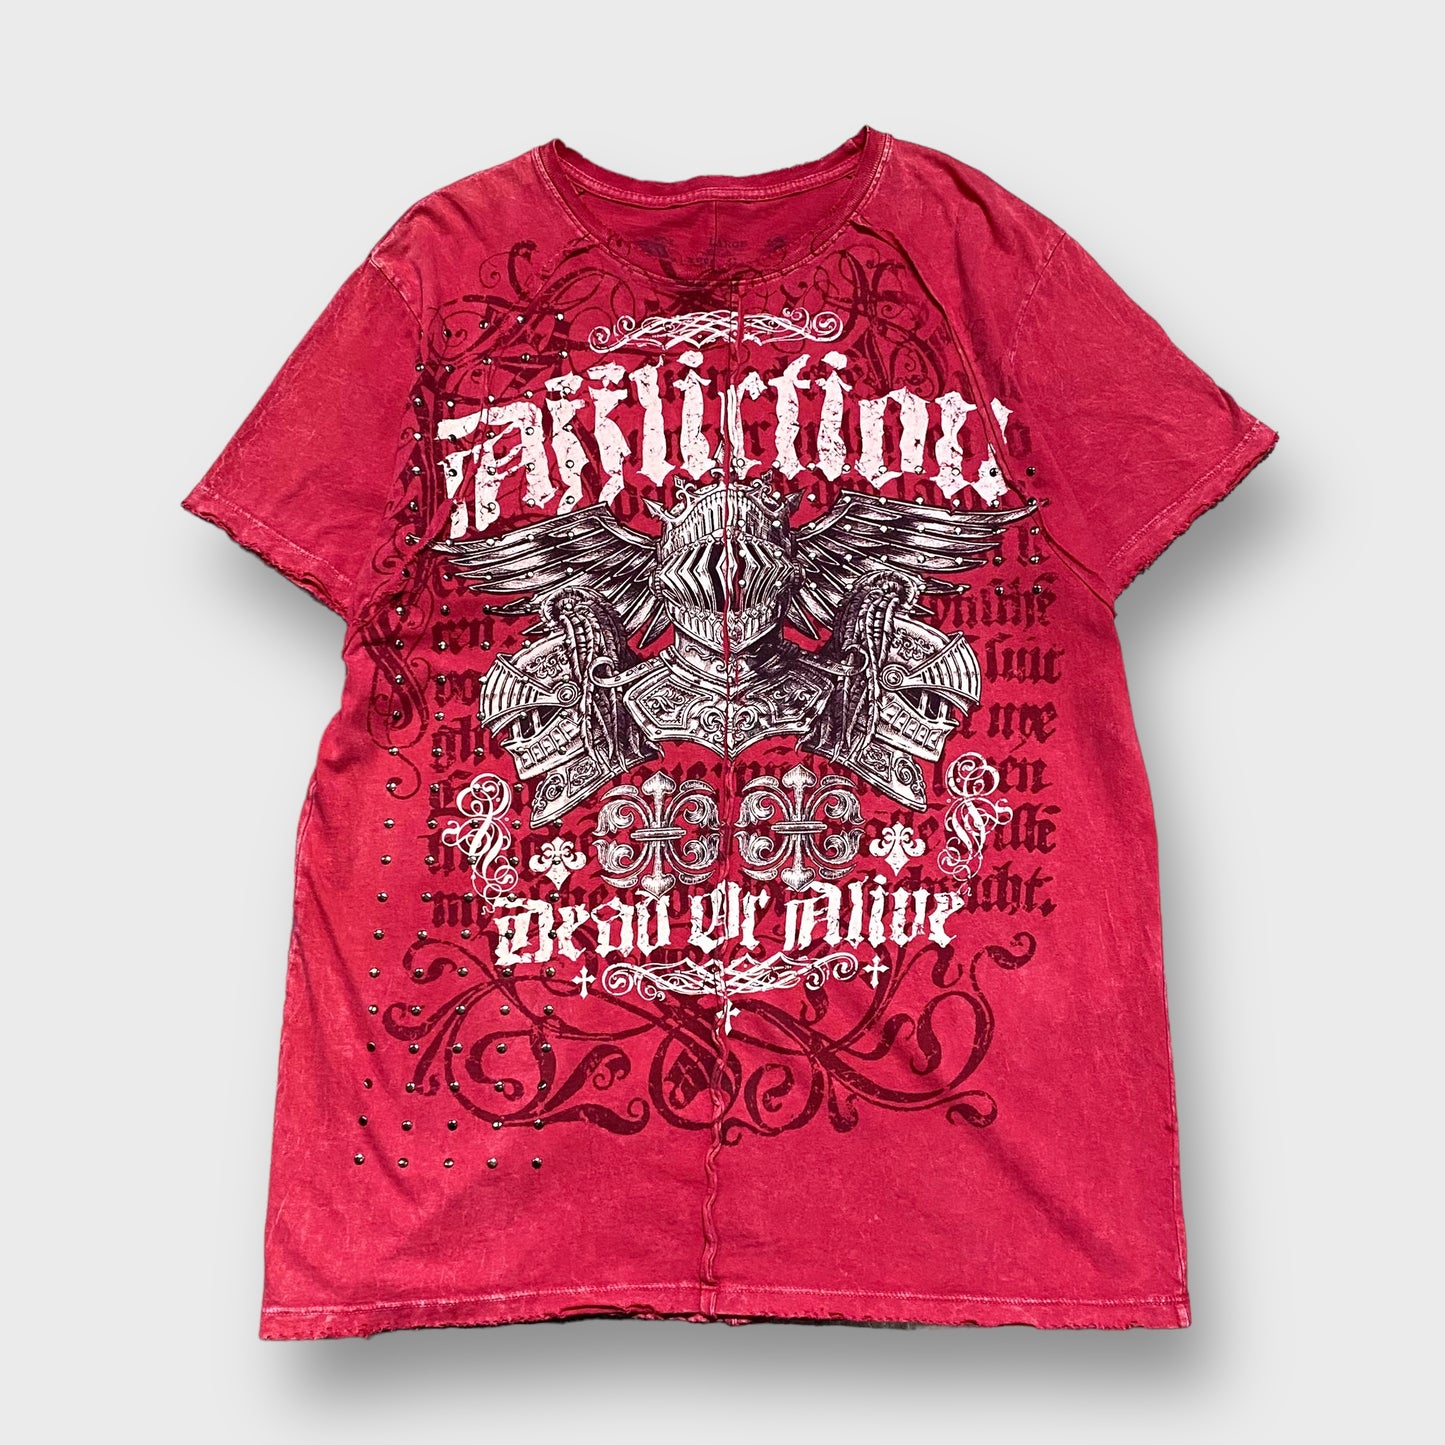 "AFFLICTION" Bijou design t-shirt